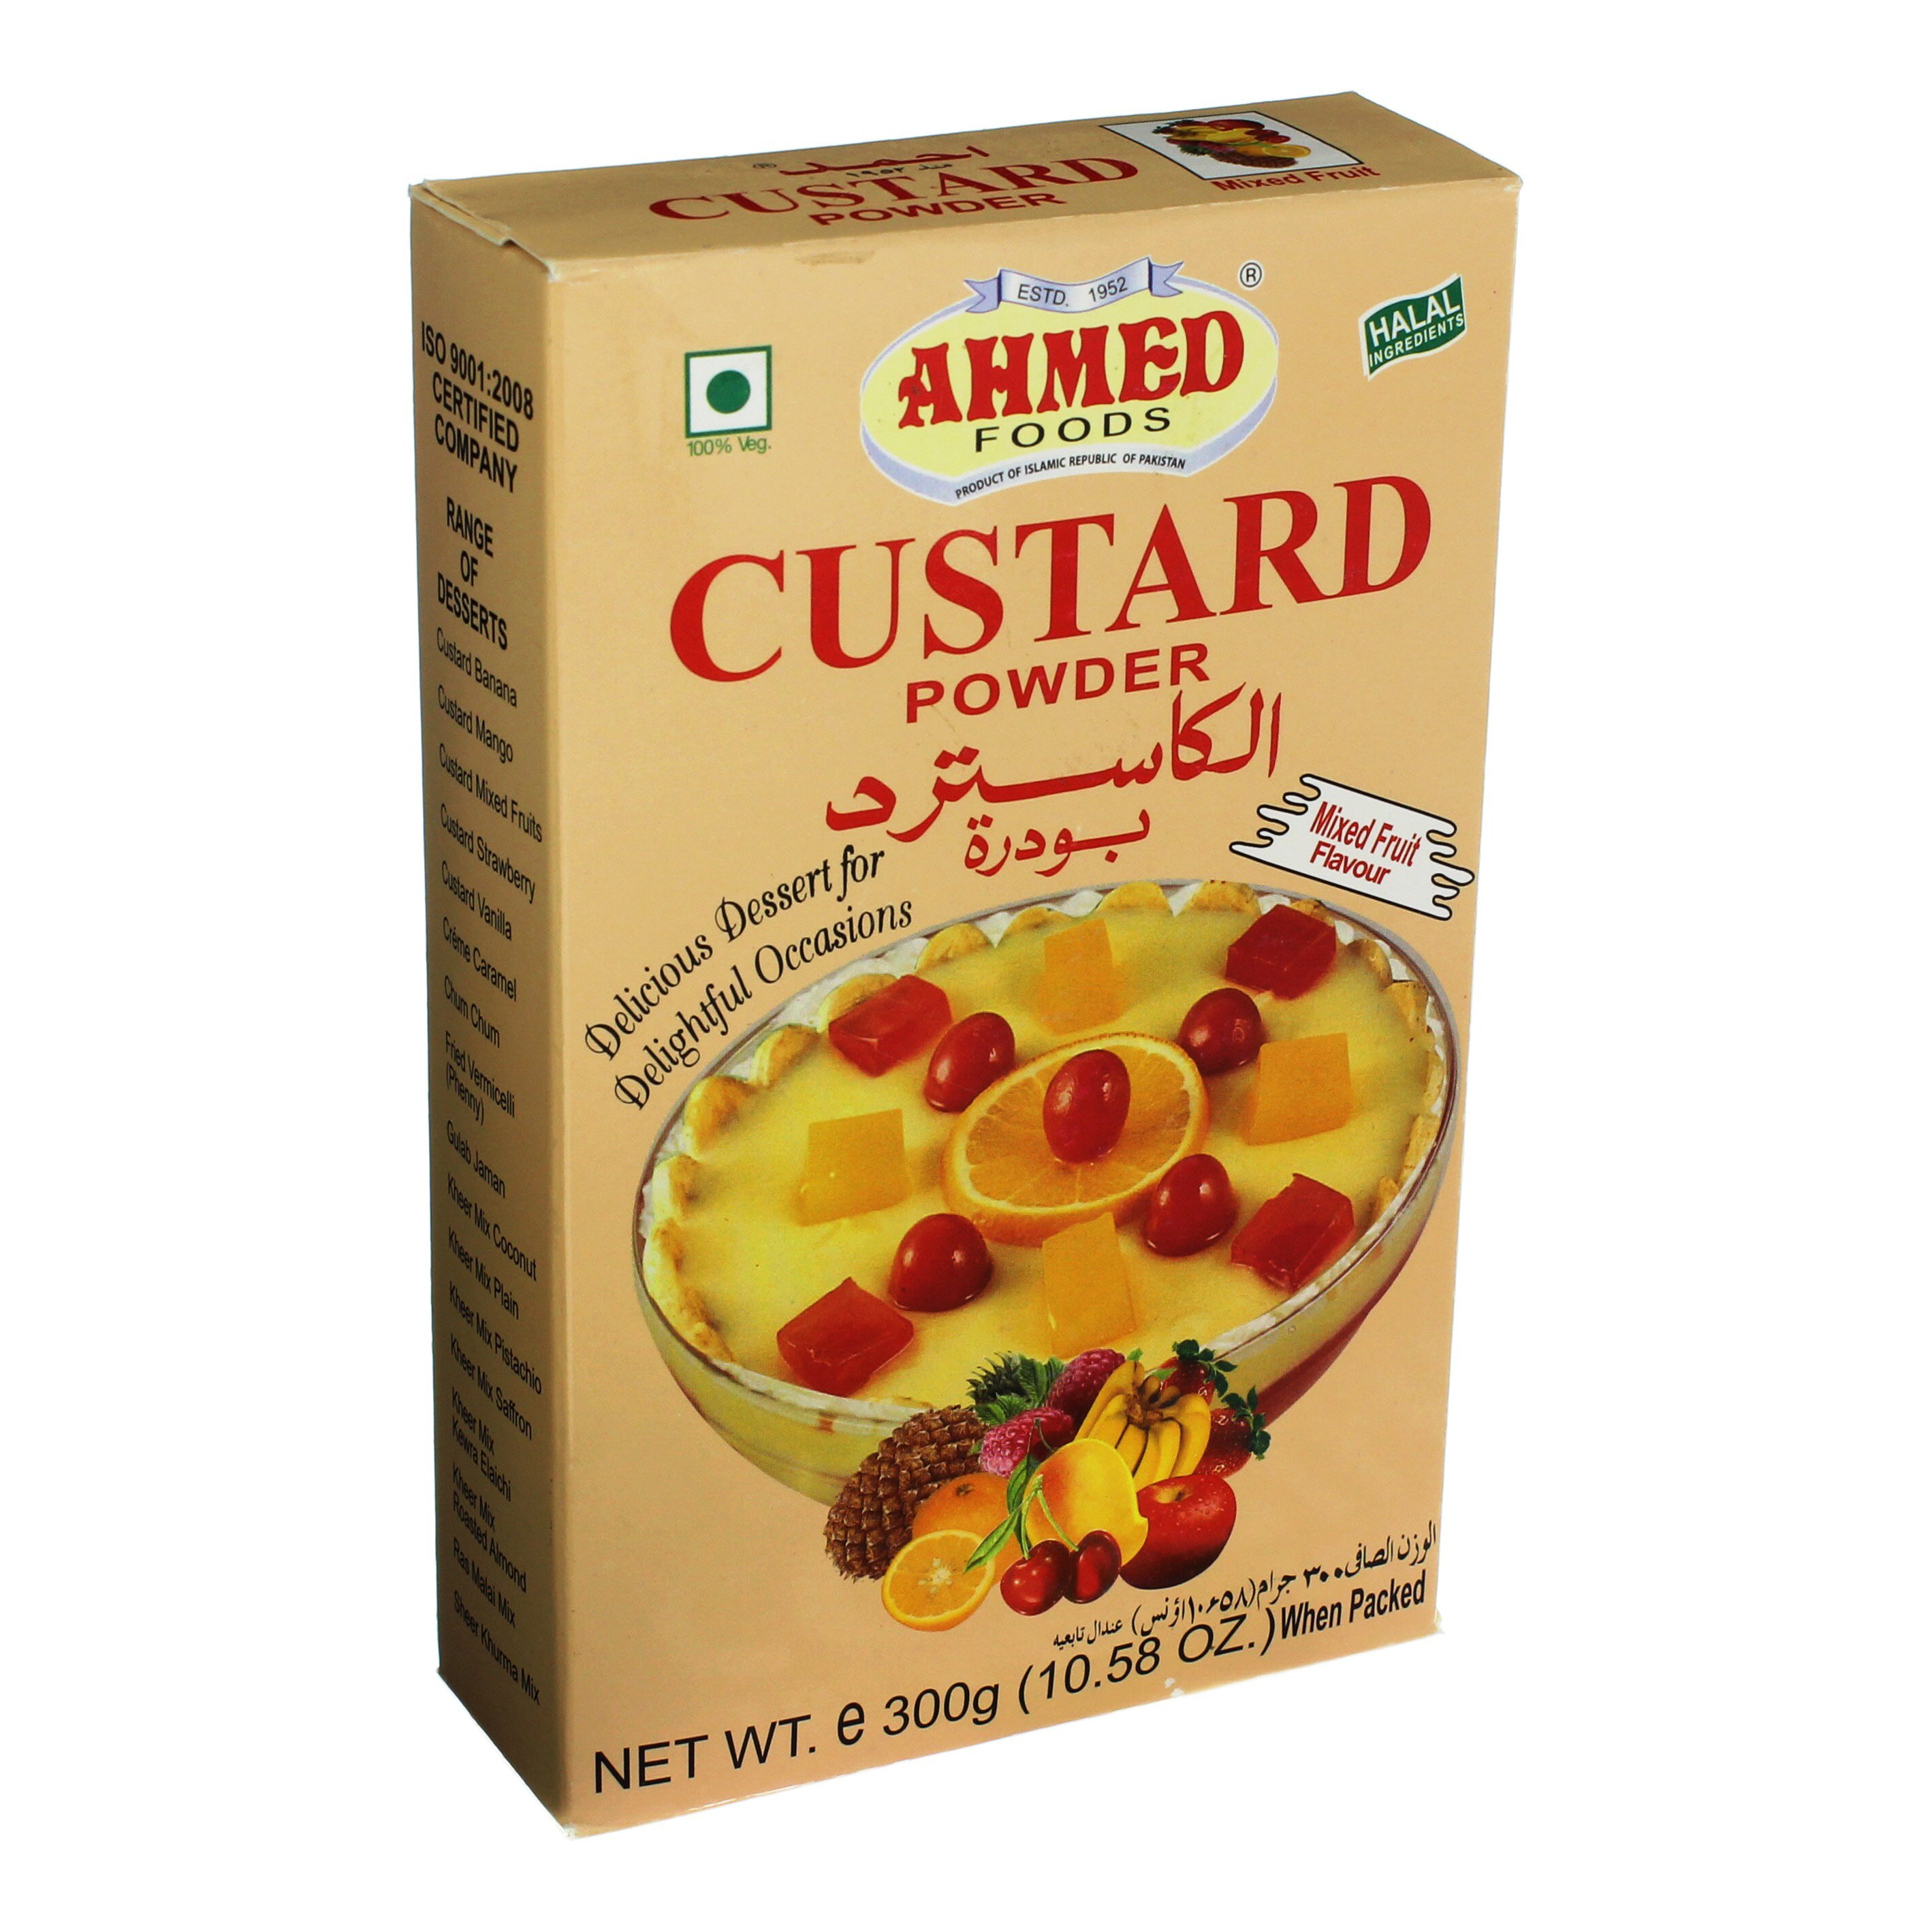 Ahmed Mixed Fruit Custard Powder Shop Pudding & Gelatin Mix at HEB